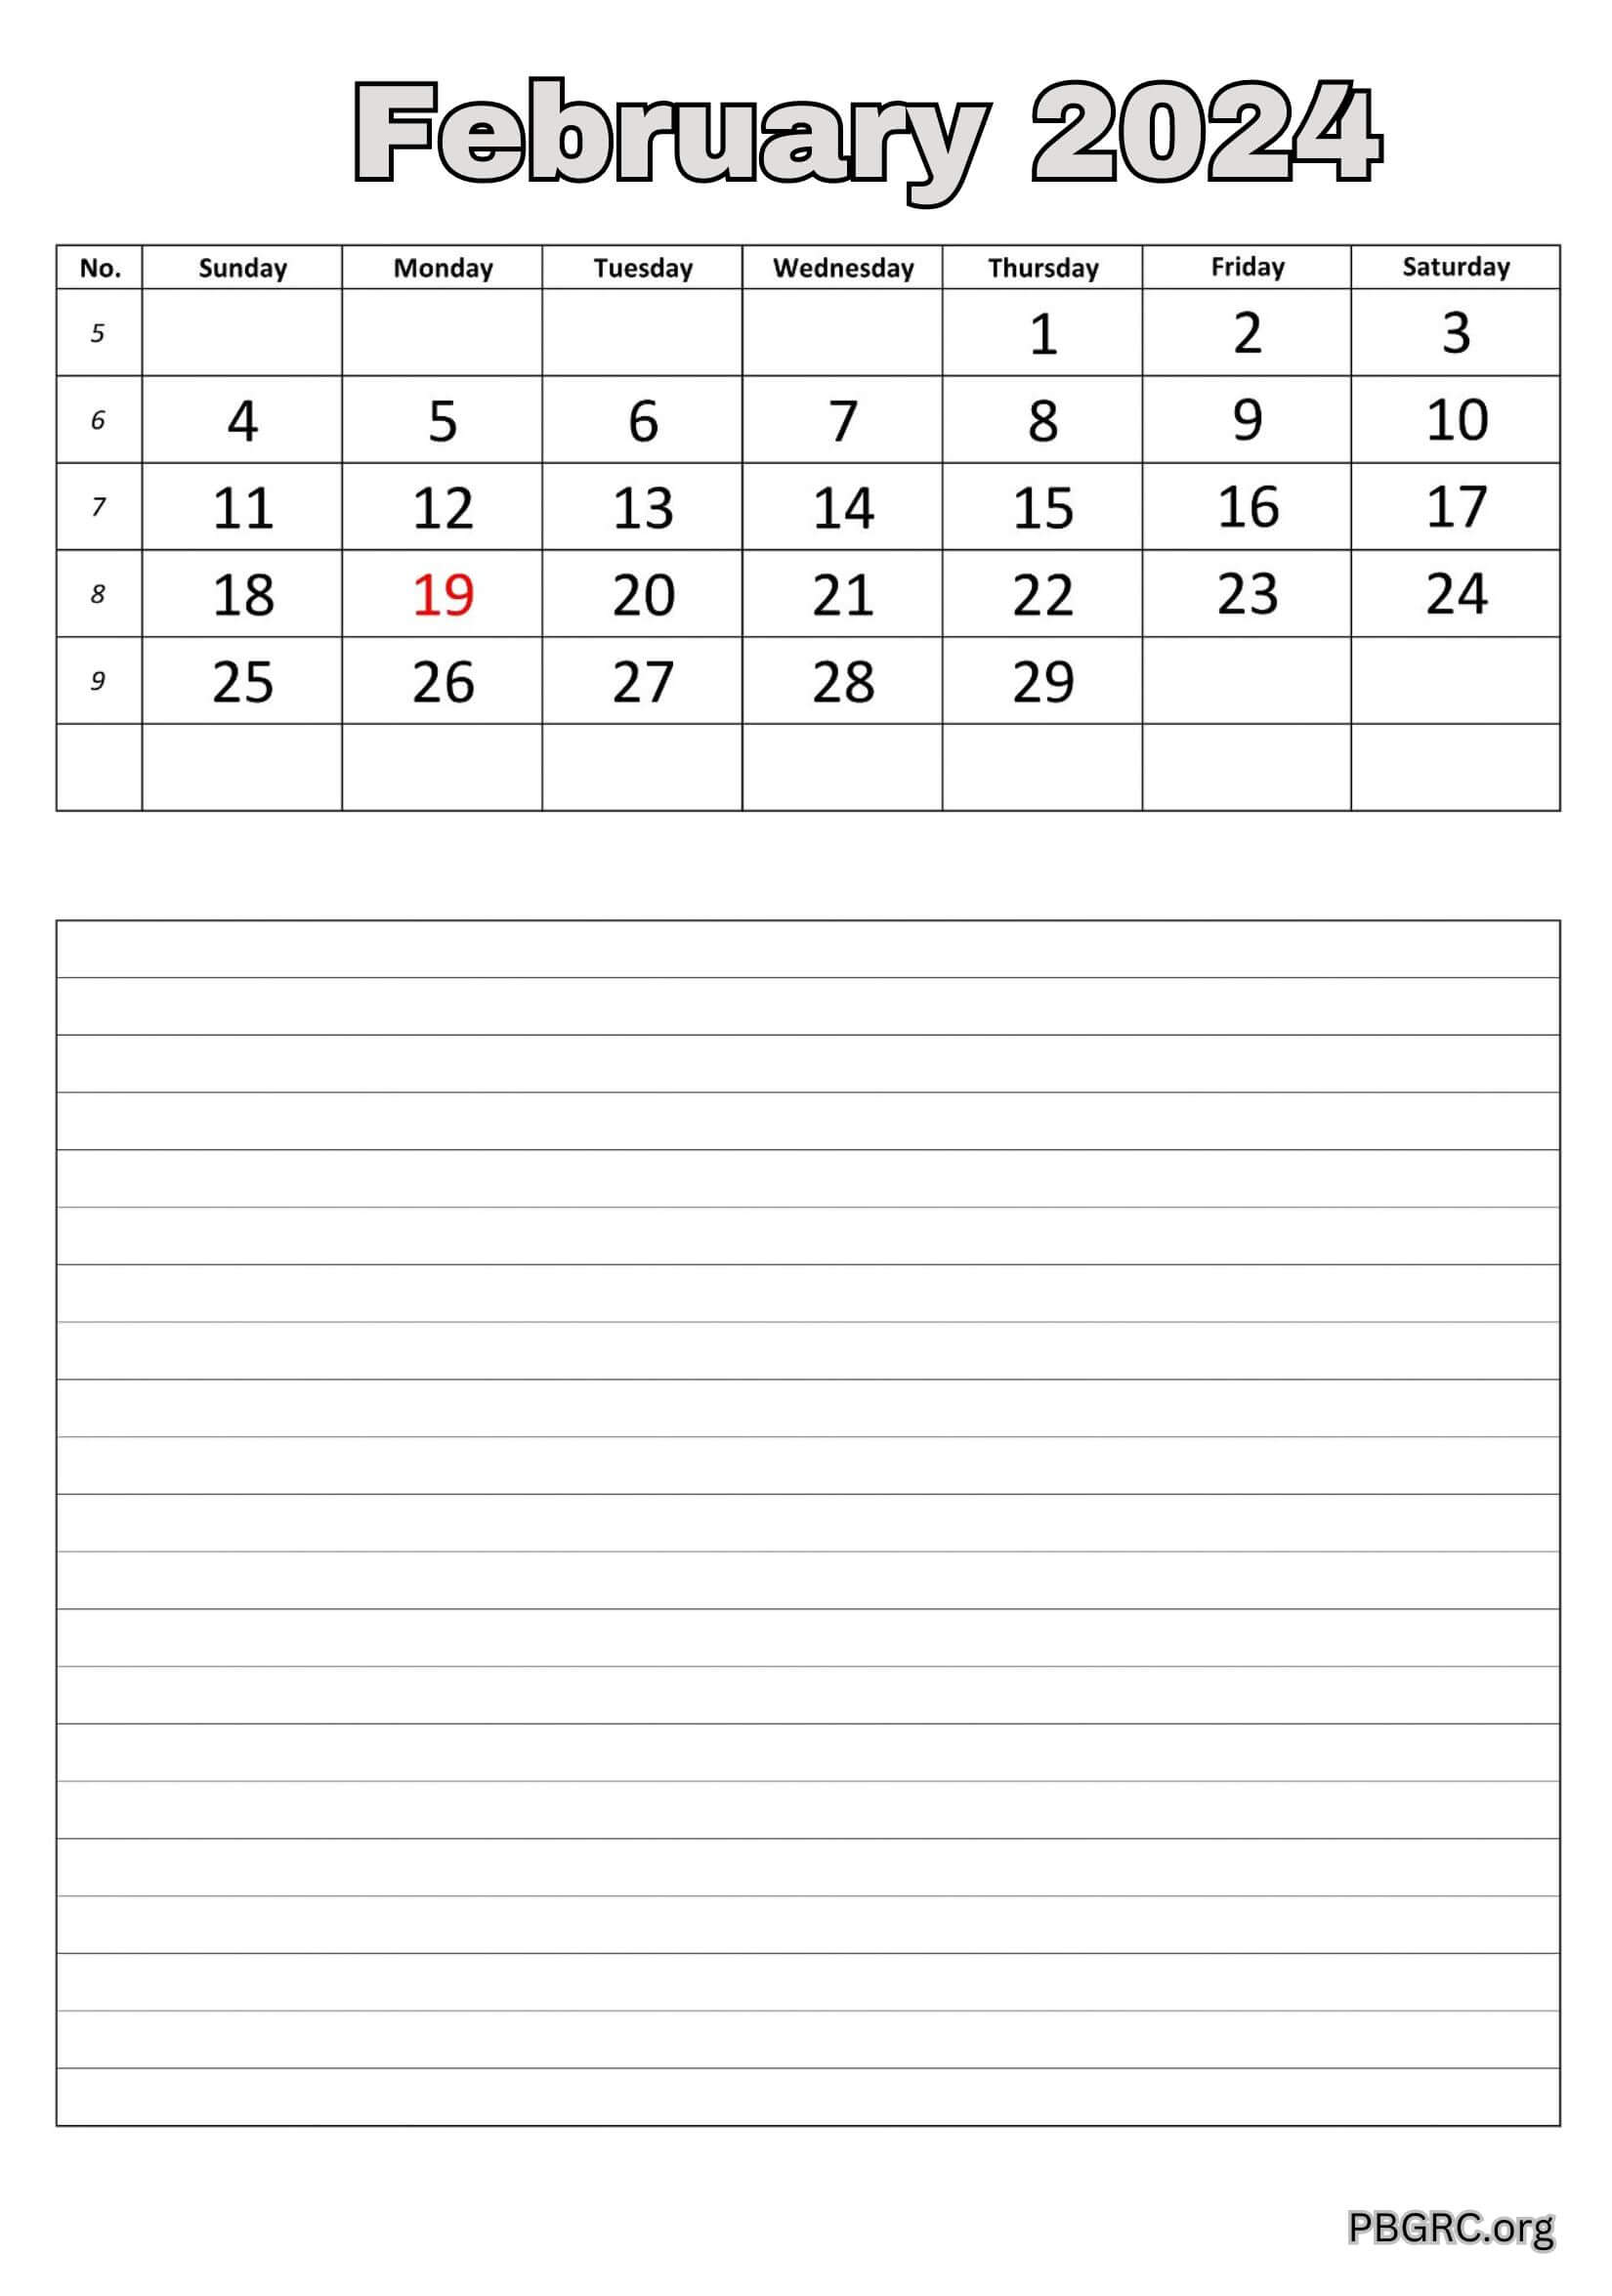 February 2024 Fillable Calendar To Print